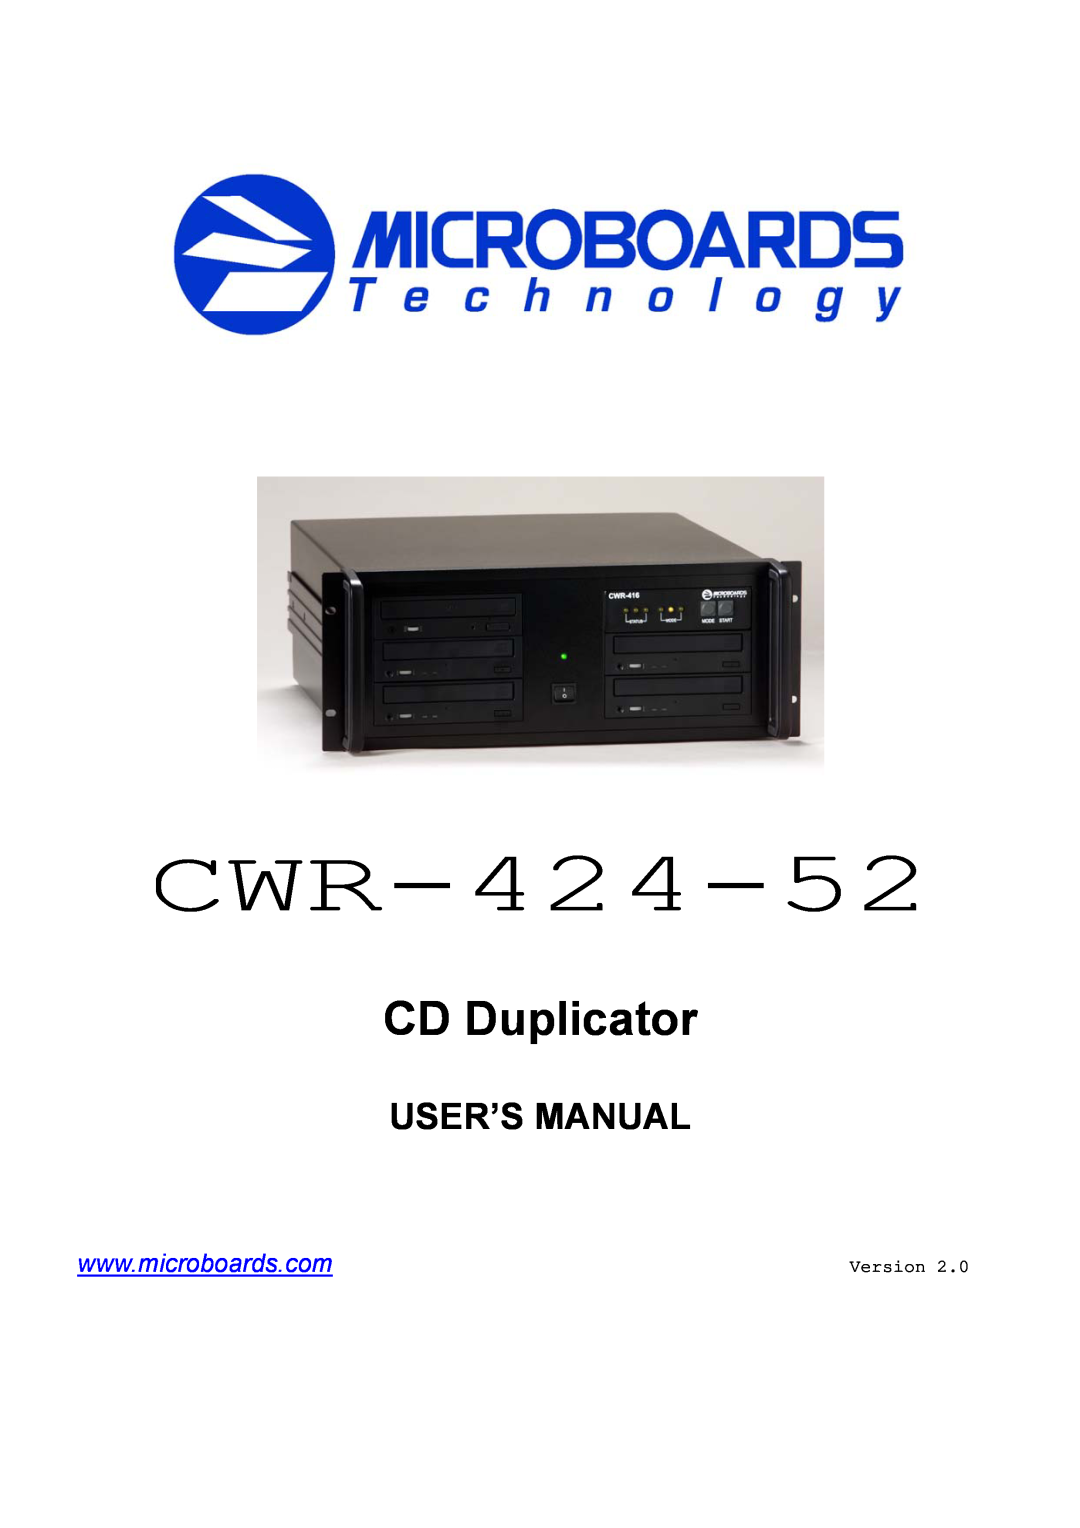 MicroBoards Technology CWR-424-52 user manual CD Duplicator, Version 